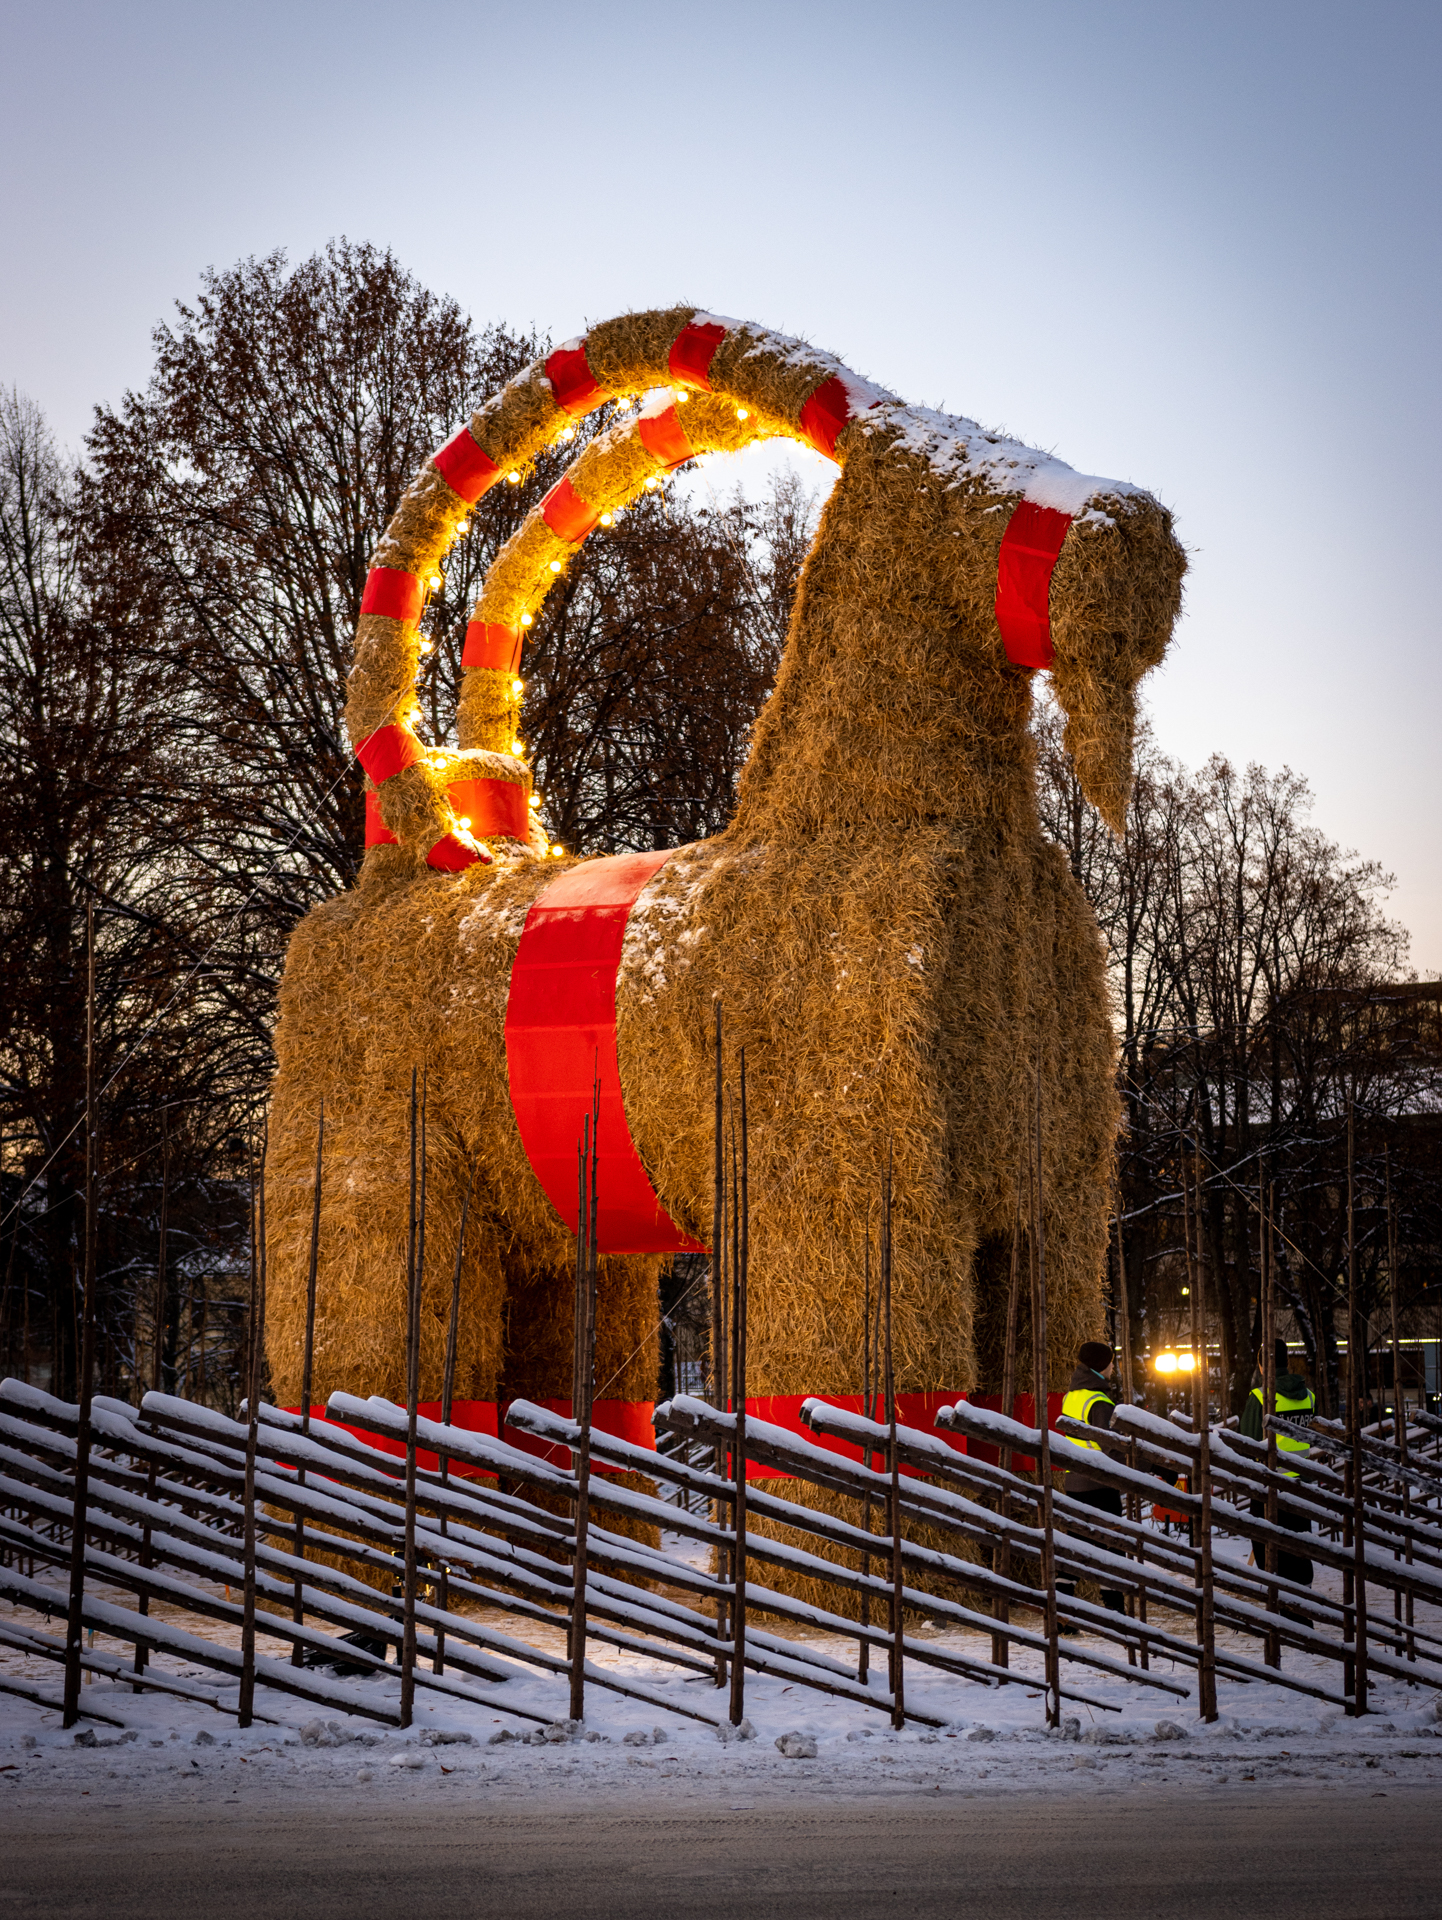 Christmas, the Norrland way